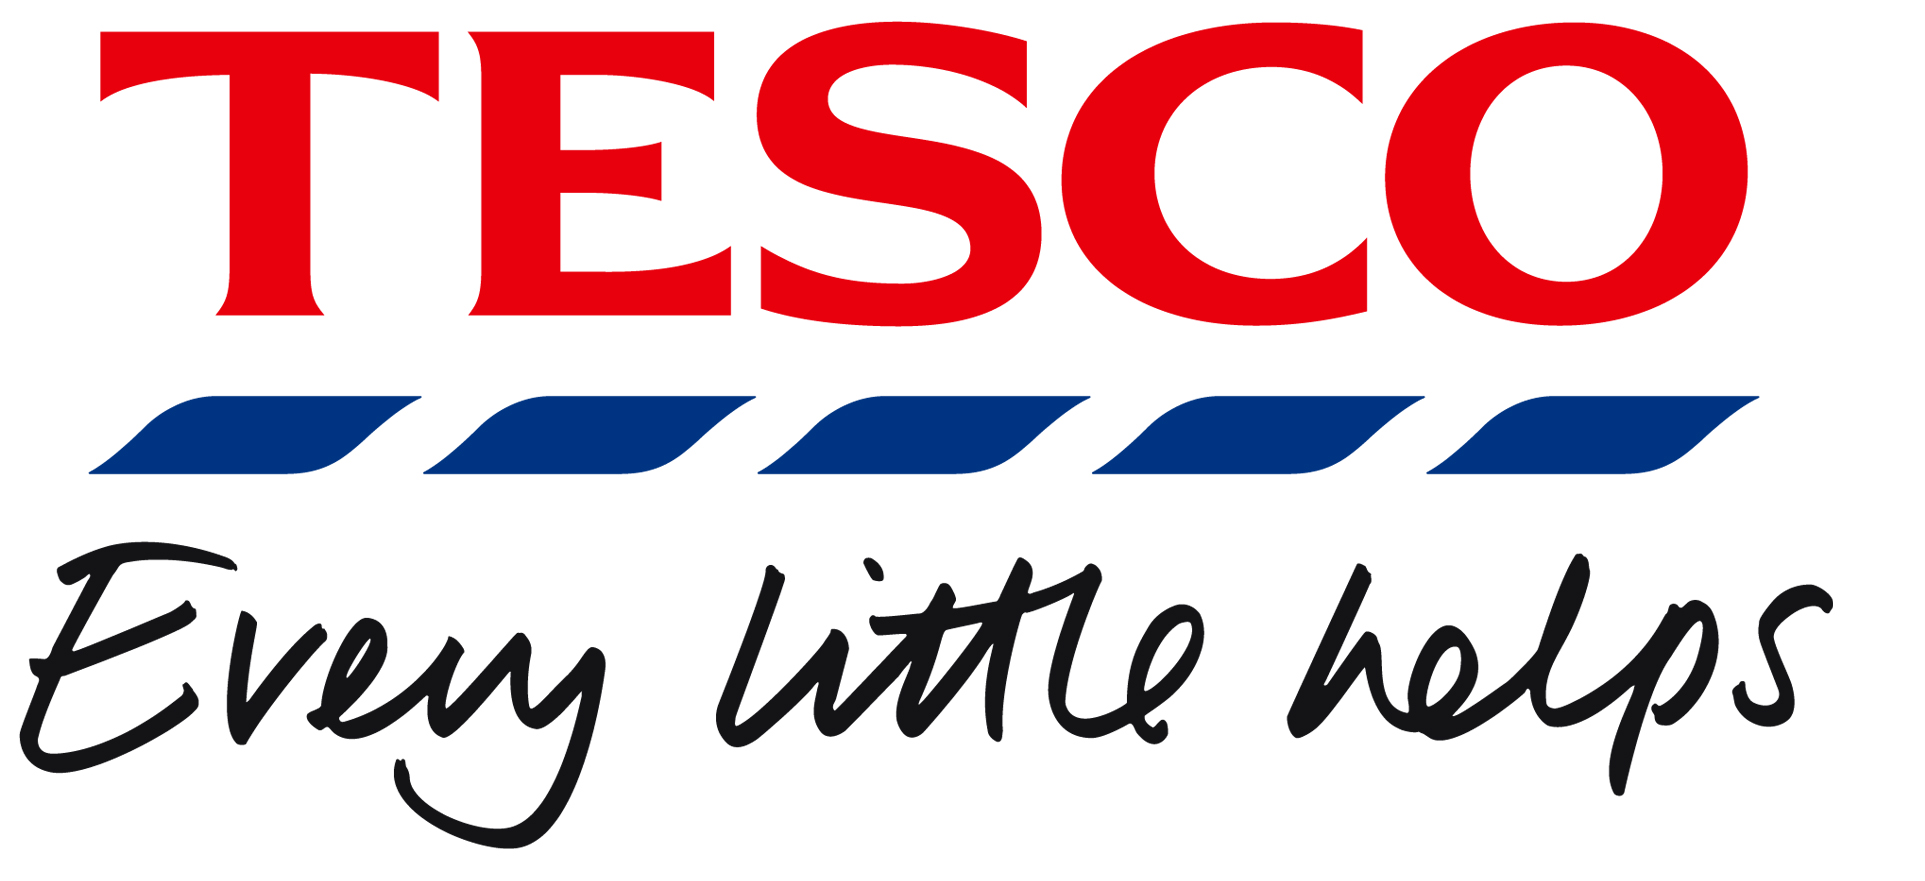 Image of Tesco logotype